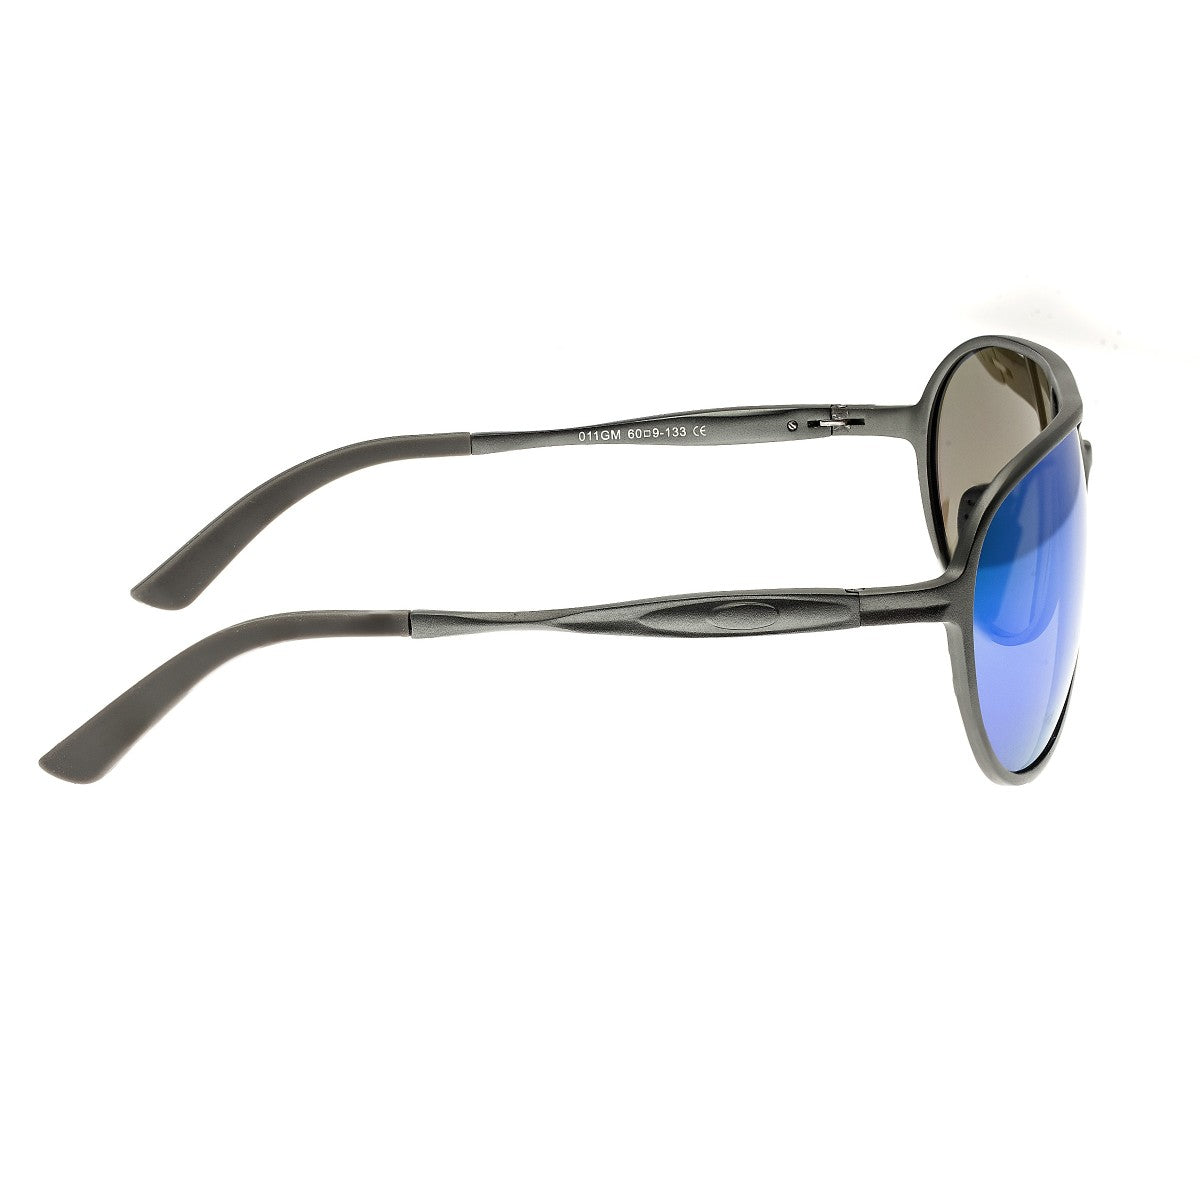 Breed Earhart Aluminium Polarized Sunglasses - Gunmetal/Blue-Green - BSG011GM